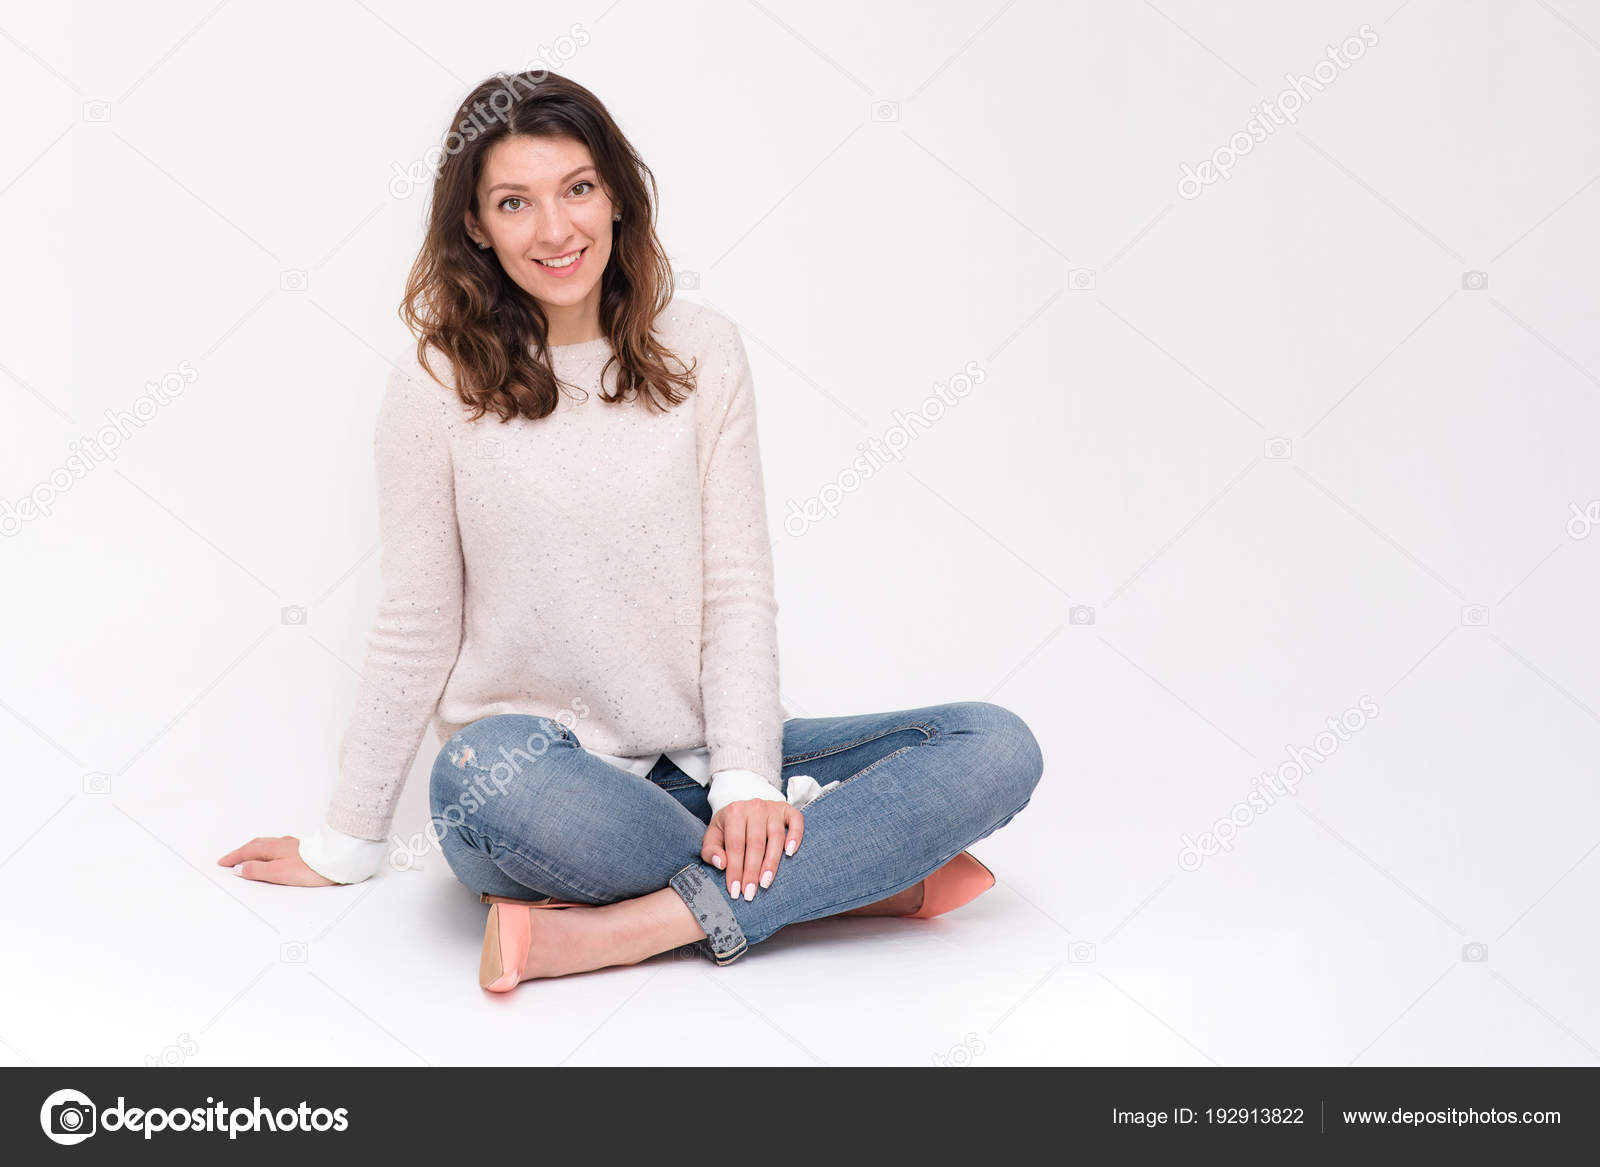 Female Mannequin, Seated on Floor Pose Subastral